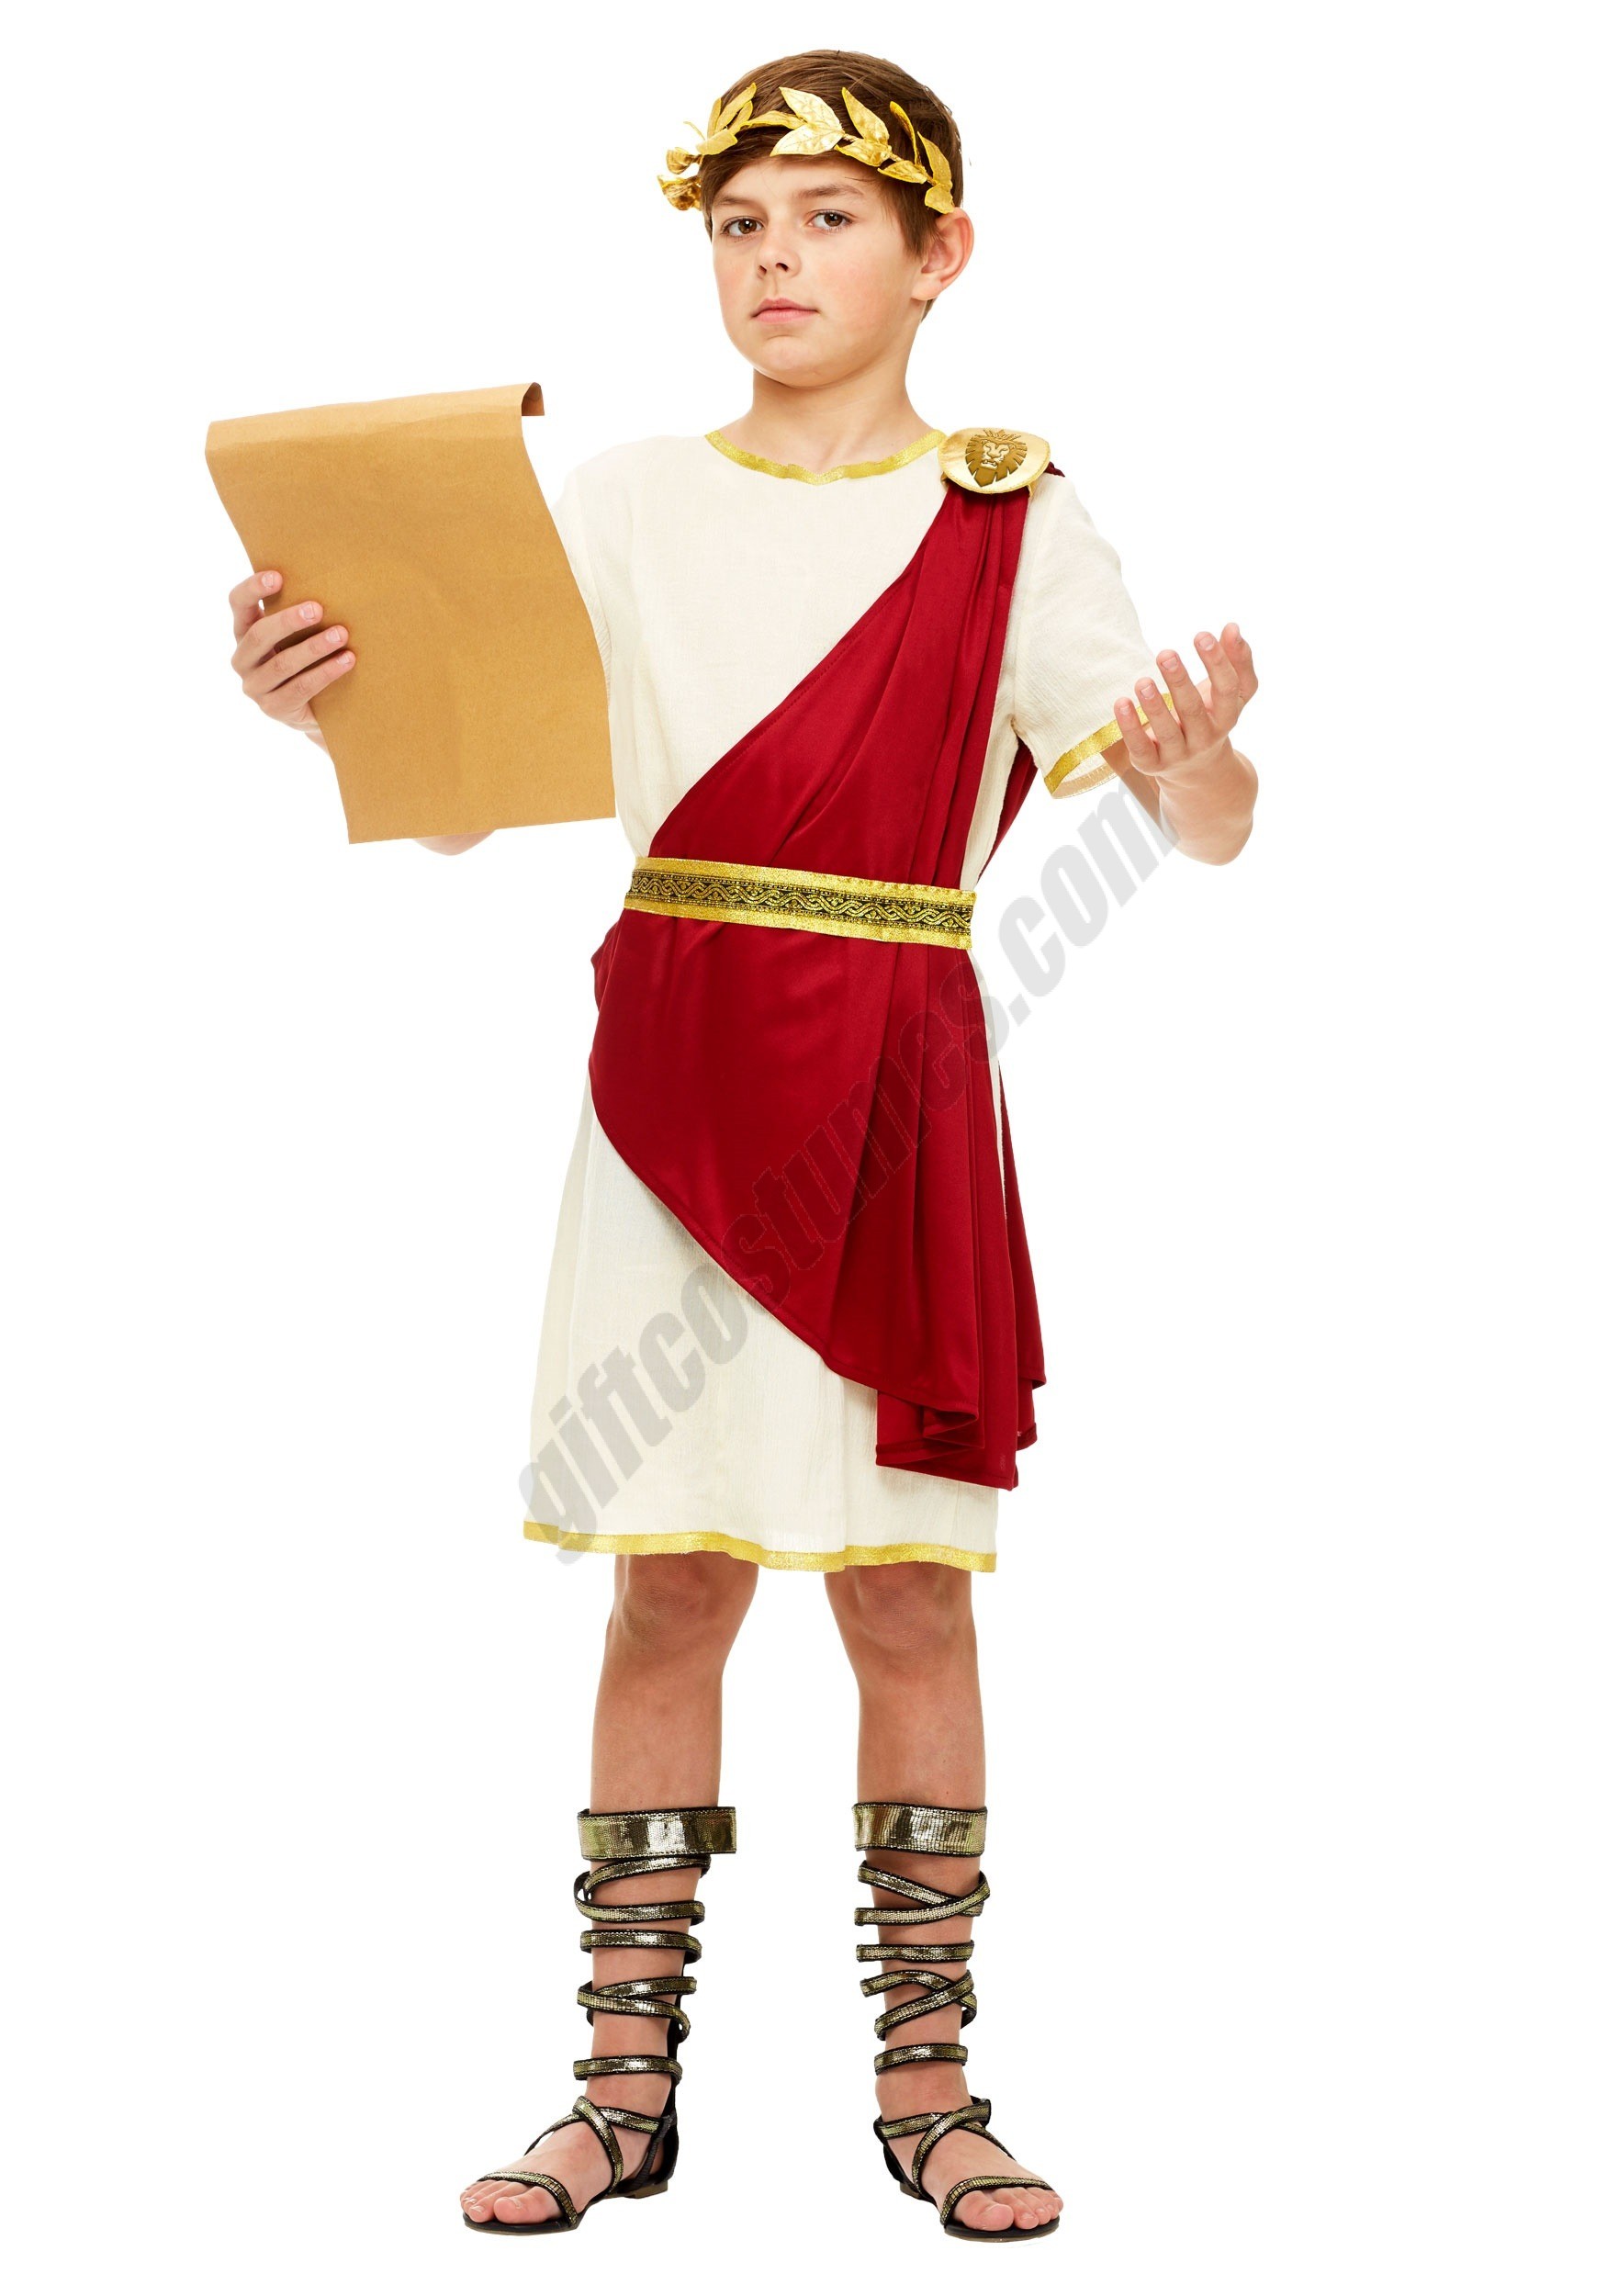 Kids Roman Senator Costume Promotions - Kids Roman Senator Costume Promotions